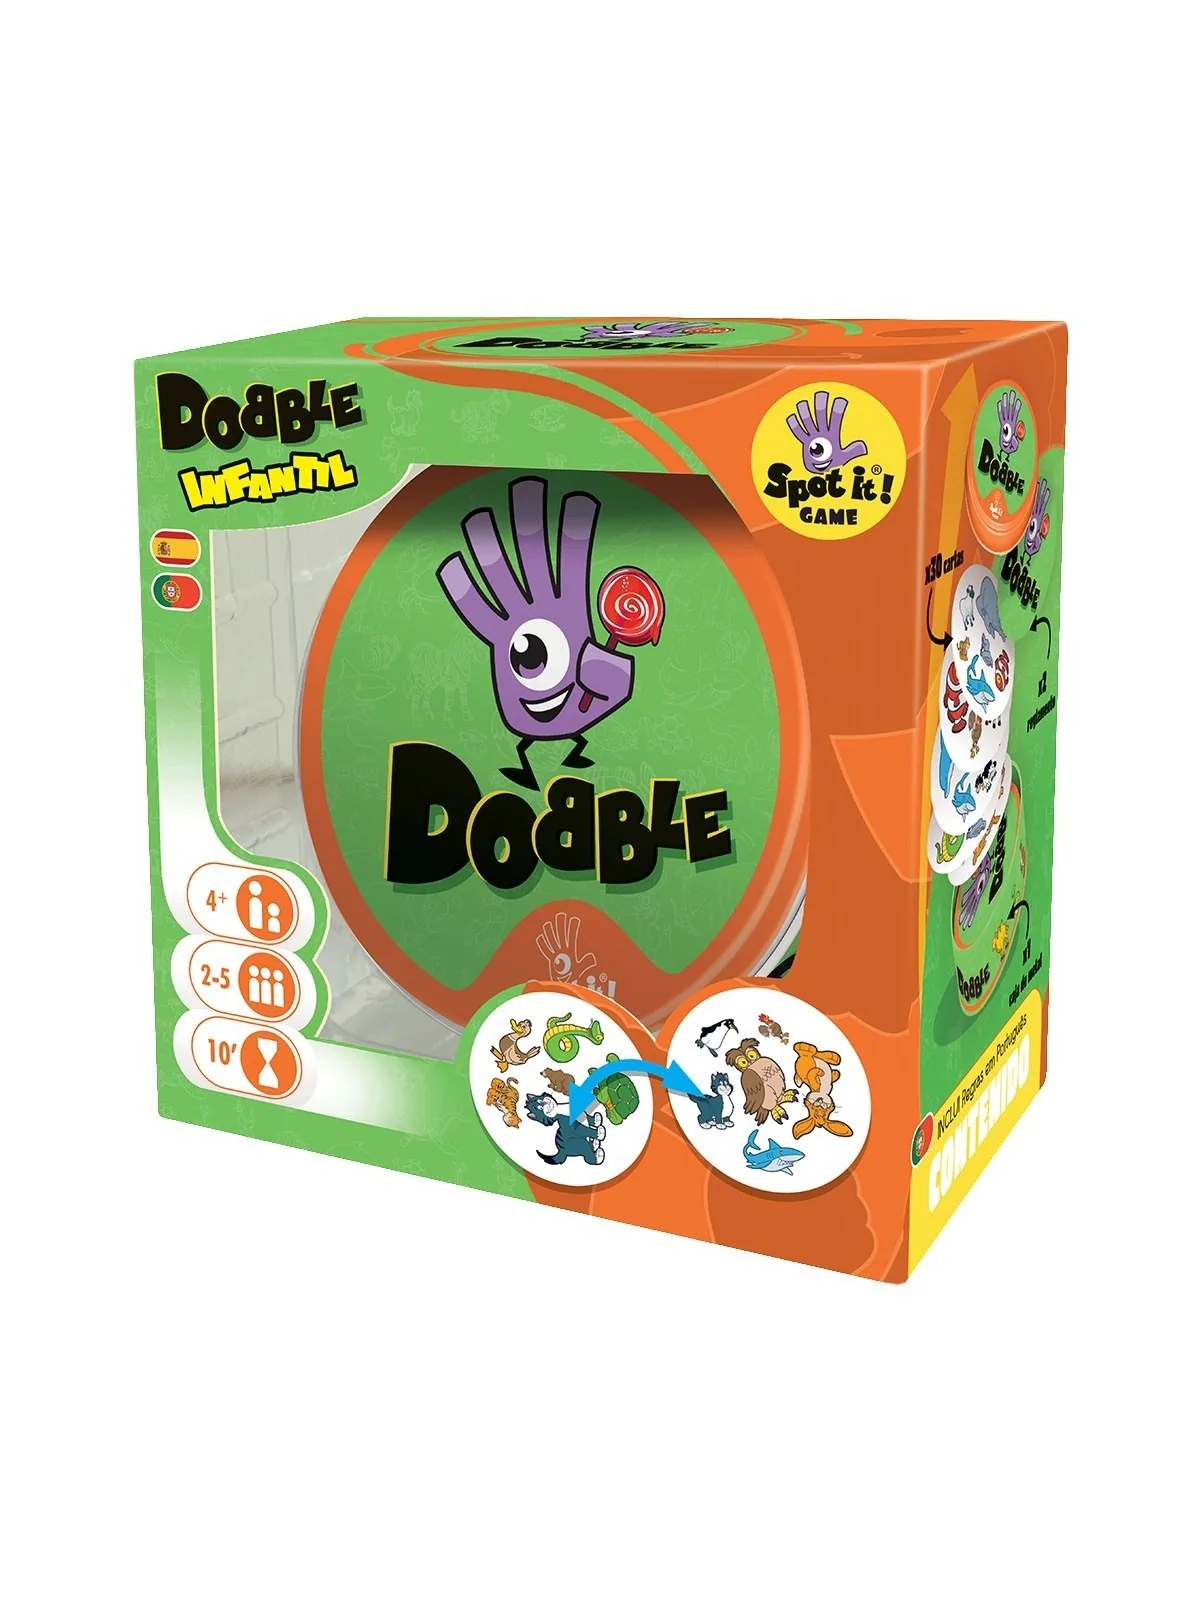 Comprar Dobble Kids barato al mejor precio 13,99 € de Zygomatic